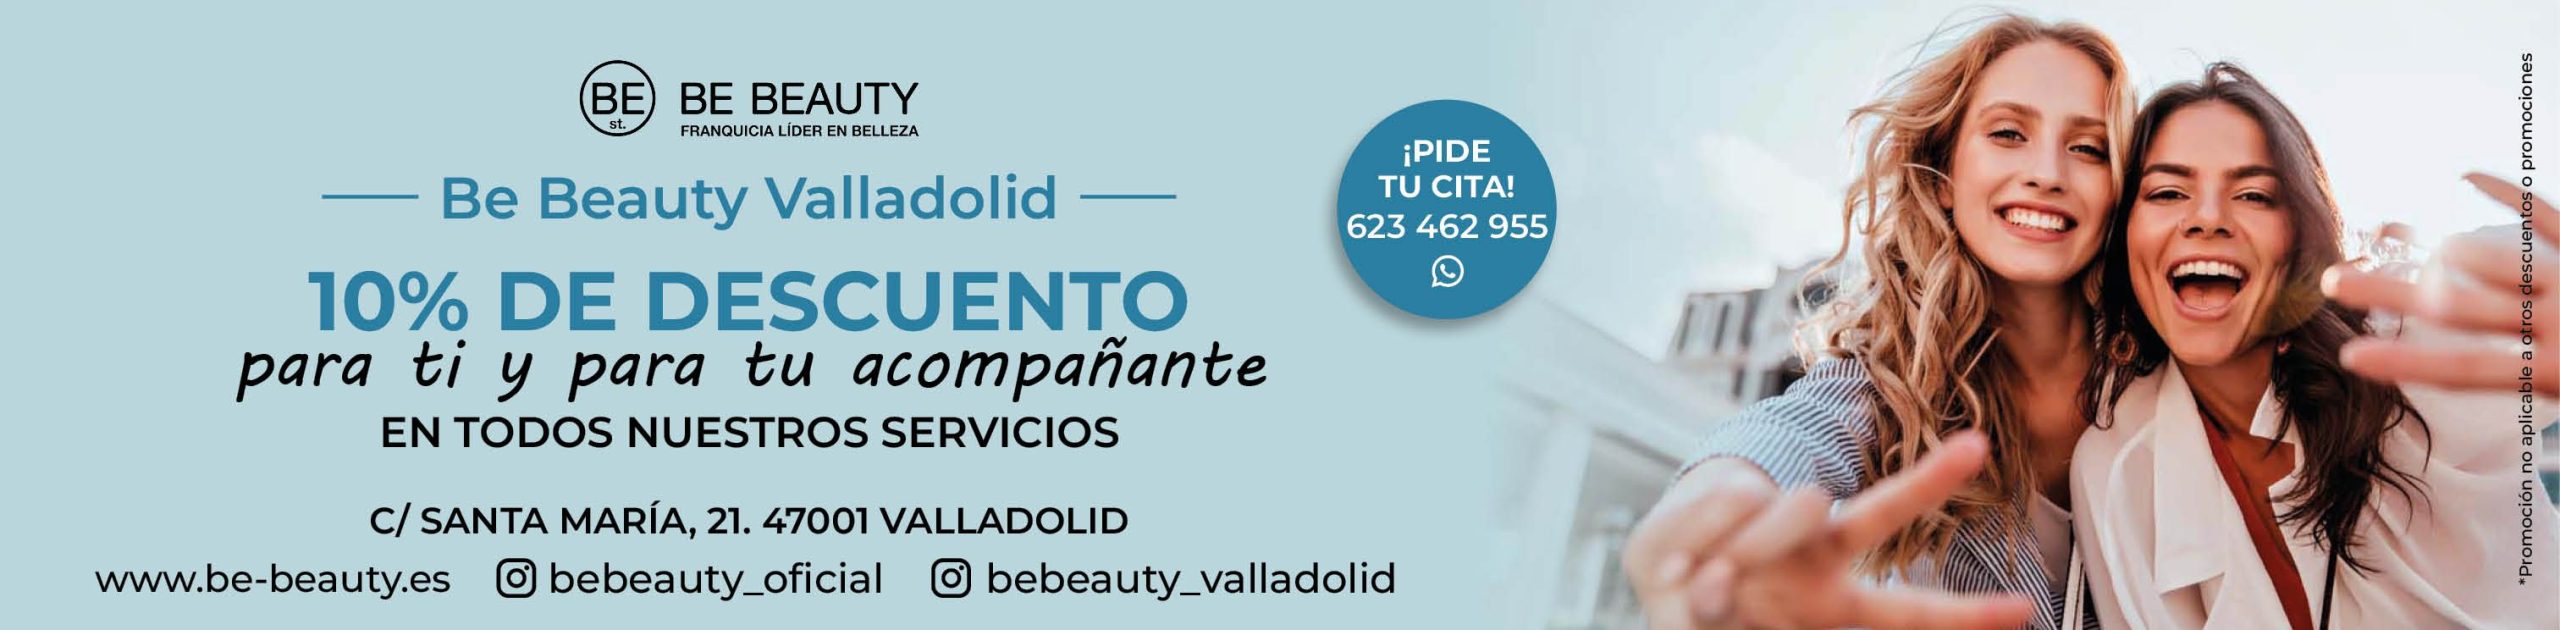 Descuento Be Beauty Valladolid